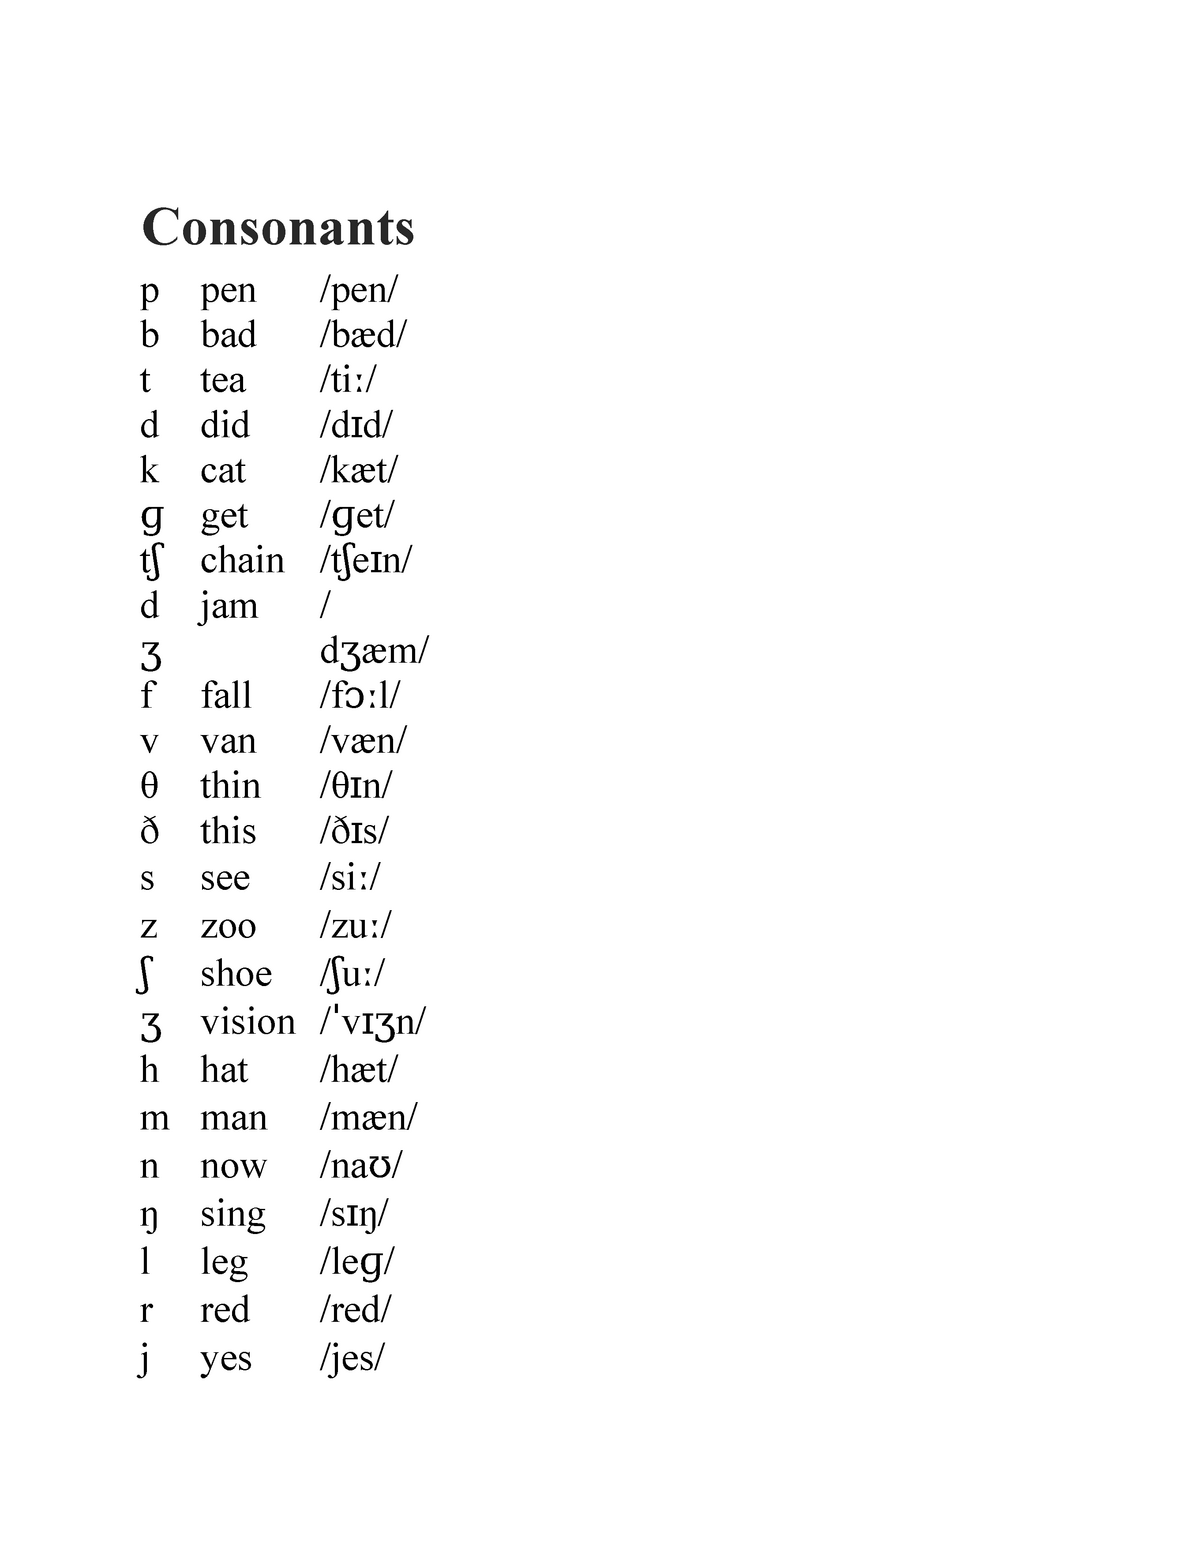 Consonants English Raeding And Writing Document Studocu